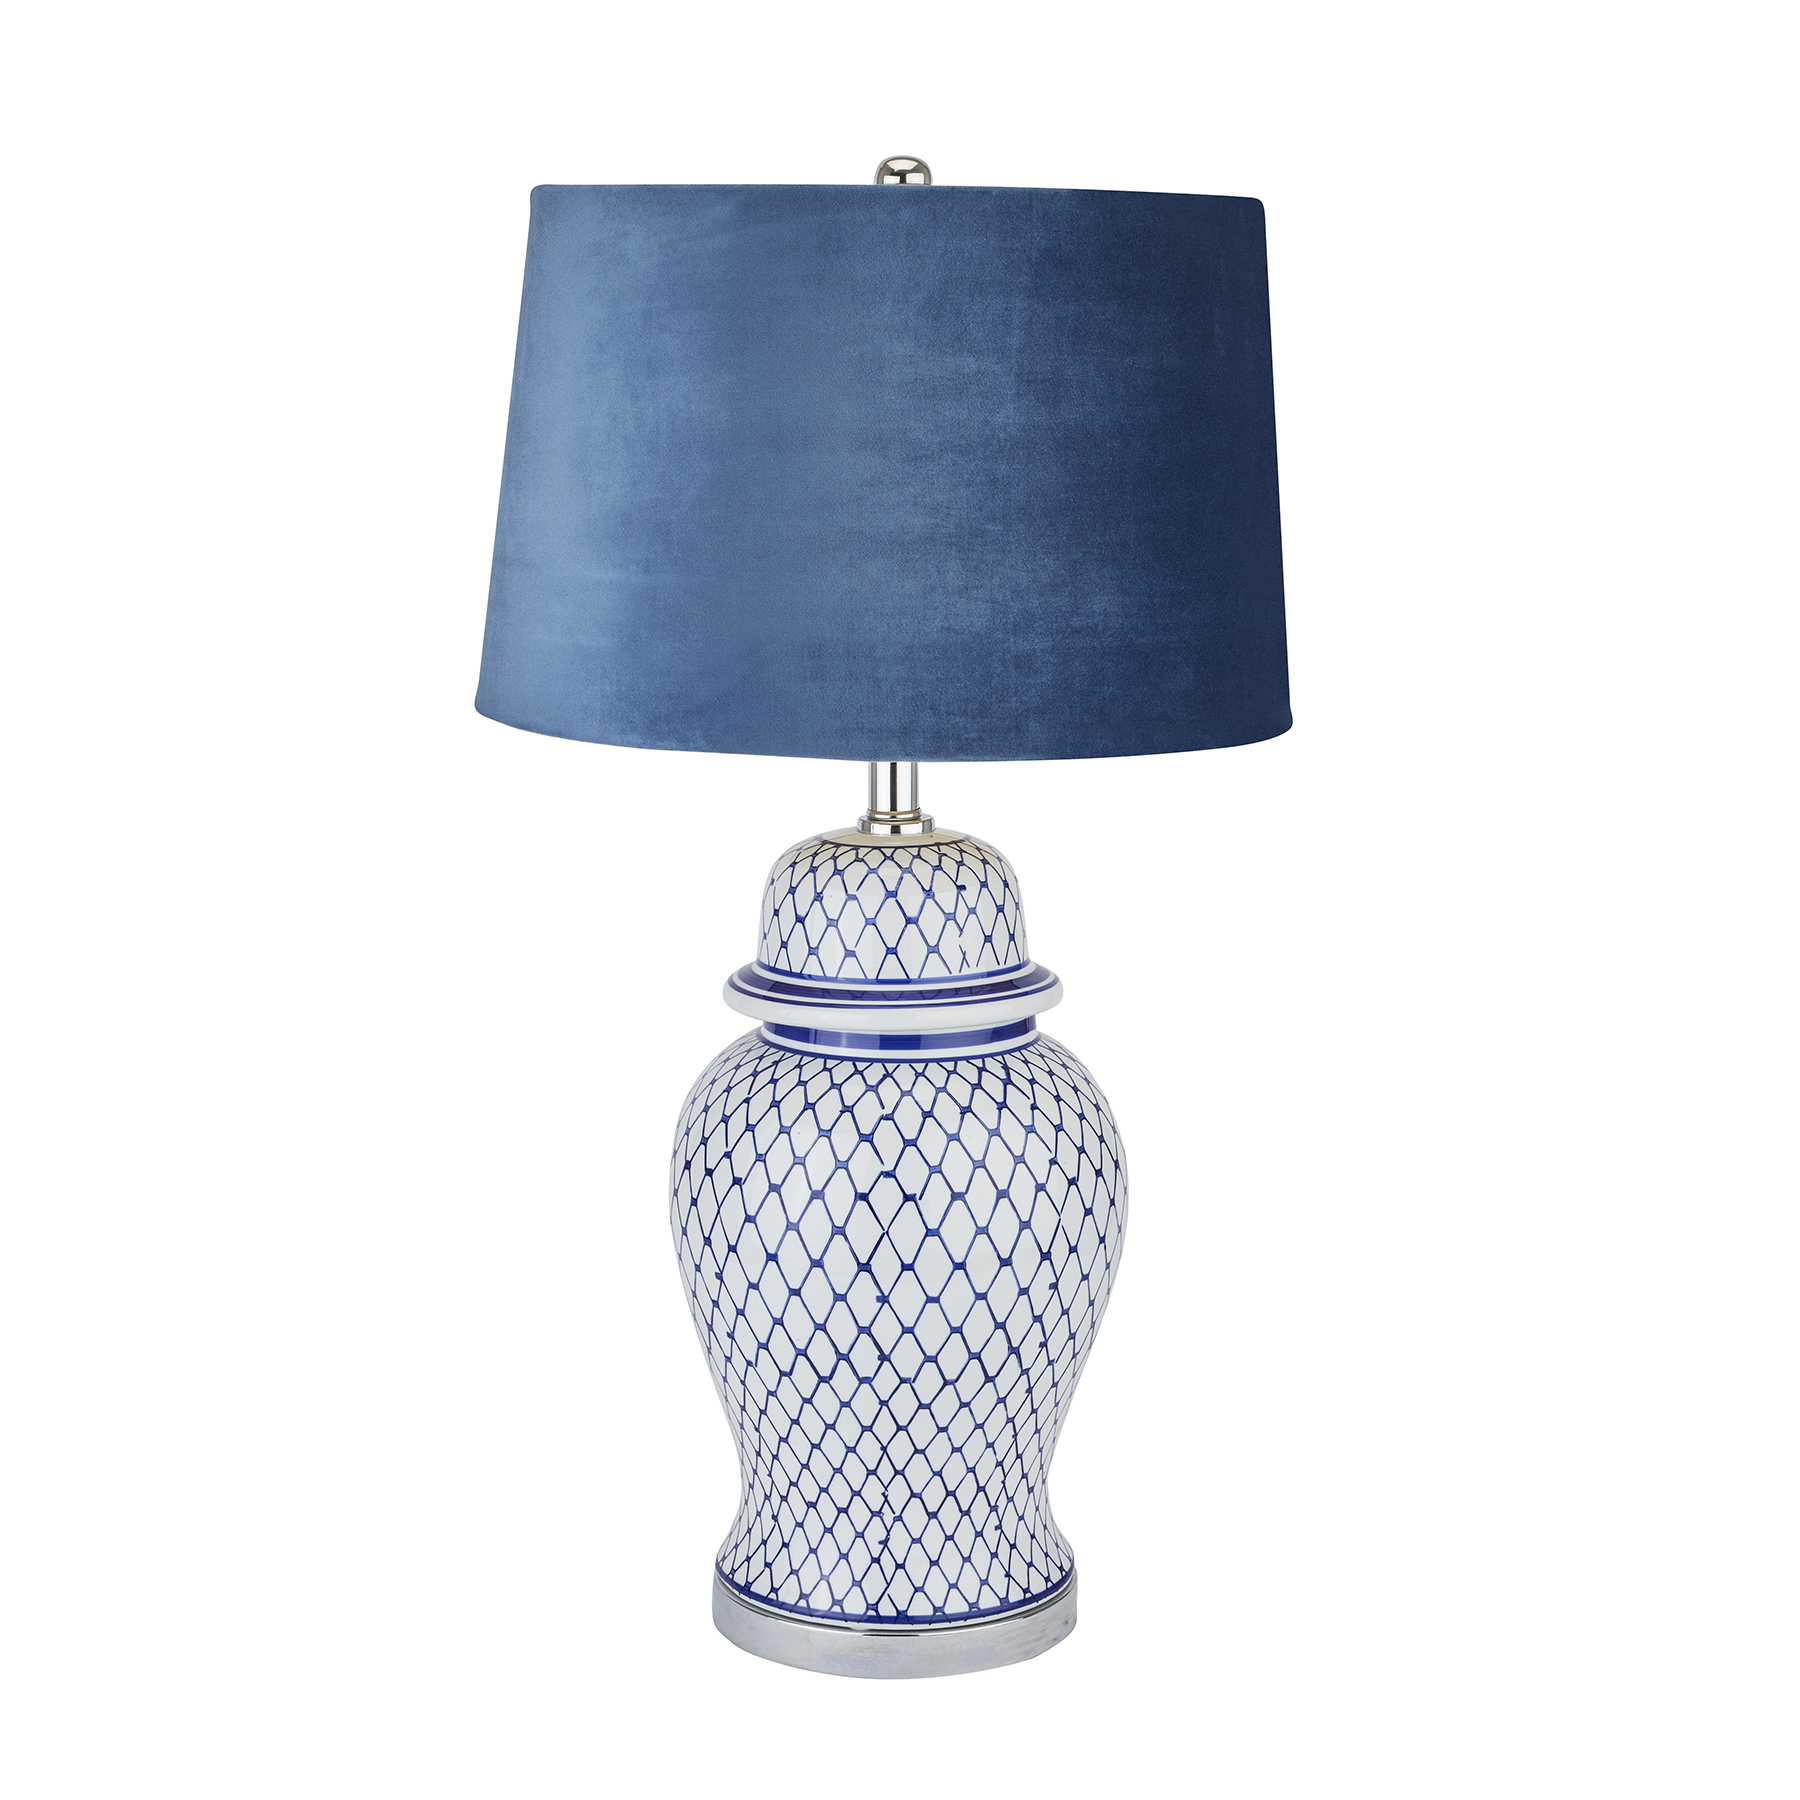 Malabar Blue And White Ceramic Lamp With Blue Velvet Shade - Image 1